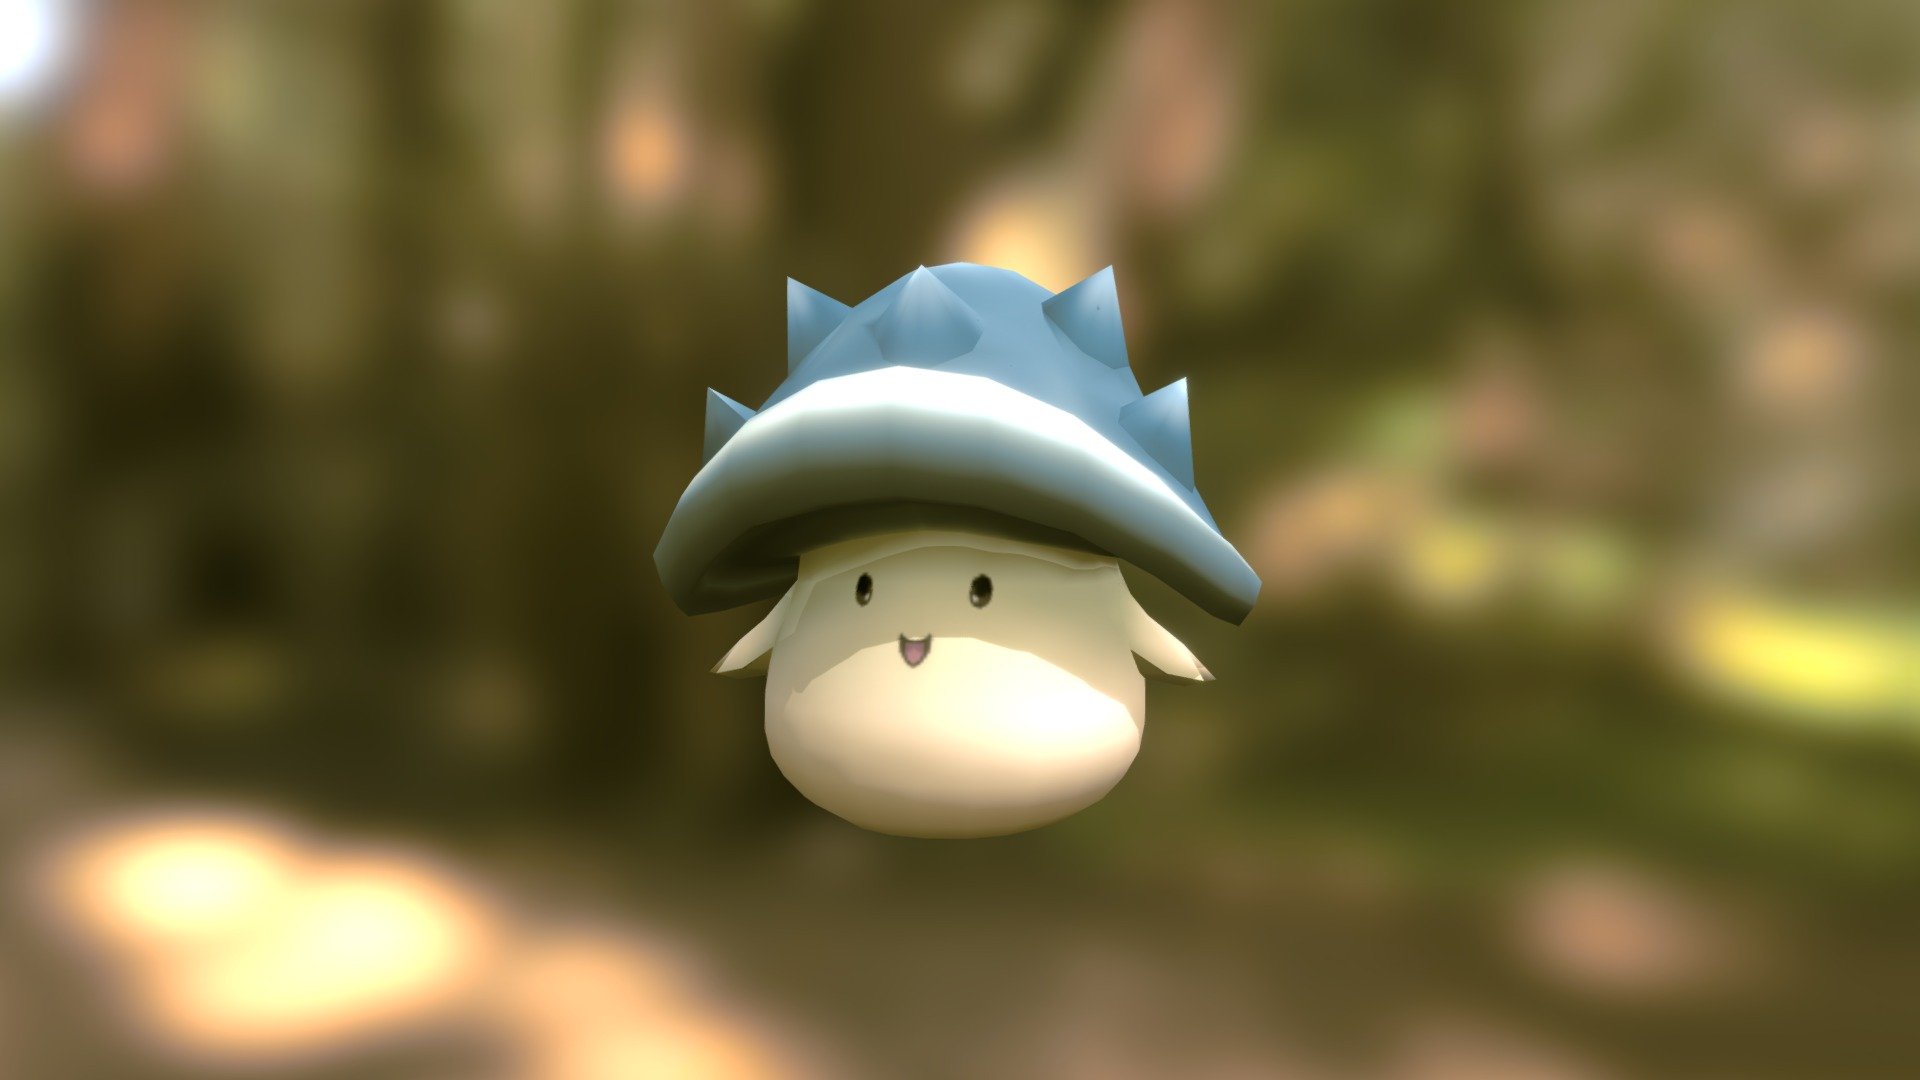 BGM Source: https://www.youtube.com/watch?v=ZruQkC5Suqc - 楓之谷: 刺菇菇 ( Maplestory: Horny Mushroom 3D model ) - 3D model by FishSan 3d model